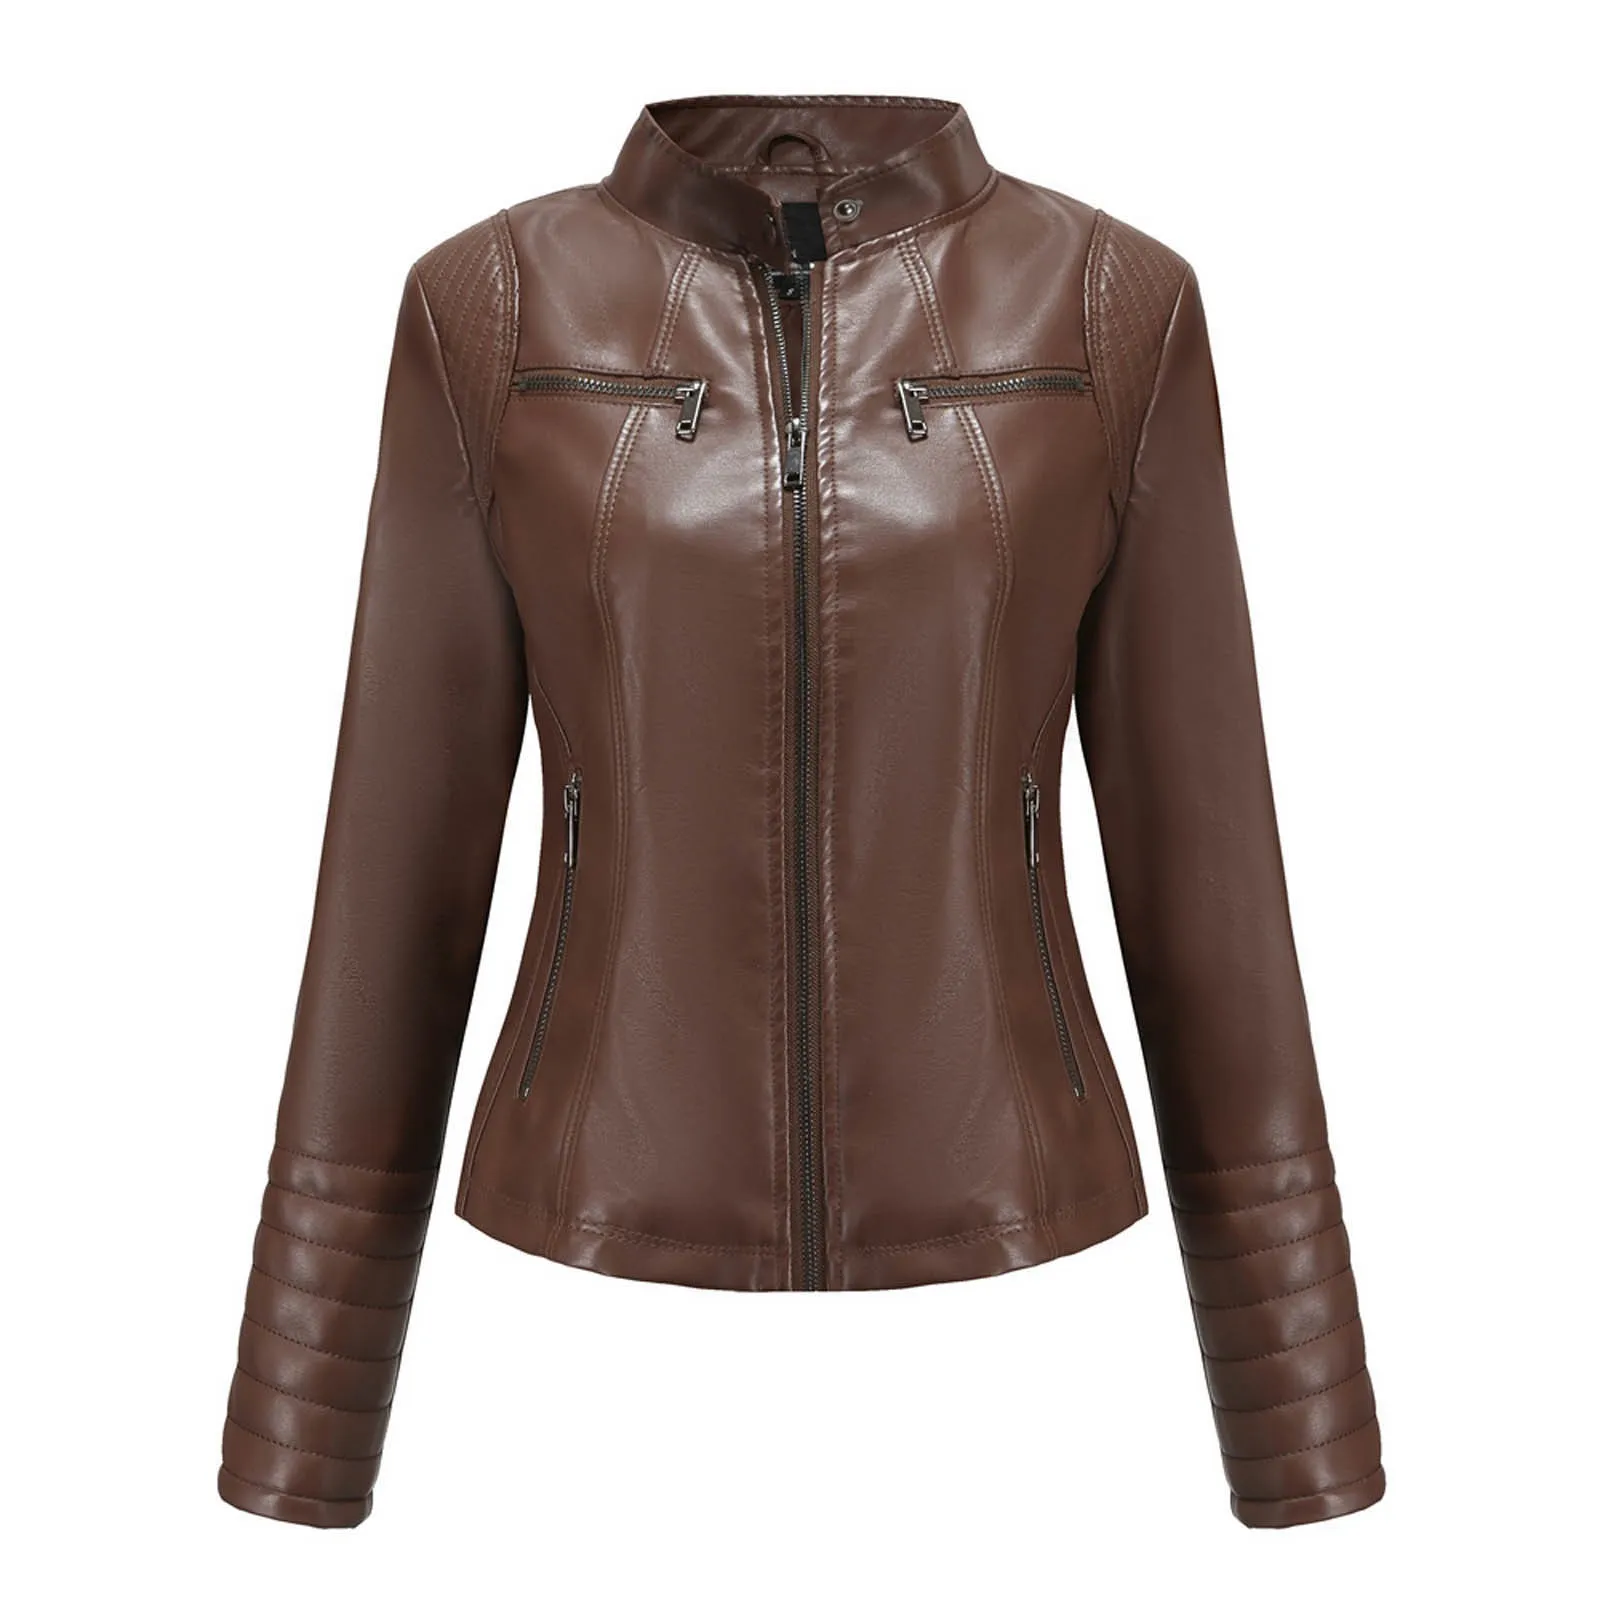 Mode Frauen Solide Farben Slim-Fit Langarm Leder Stehkragen Zipper Motorrad Anzug Dünne Mantel Jacke Oberbekleidung # g3